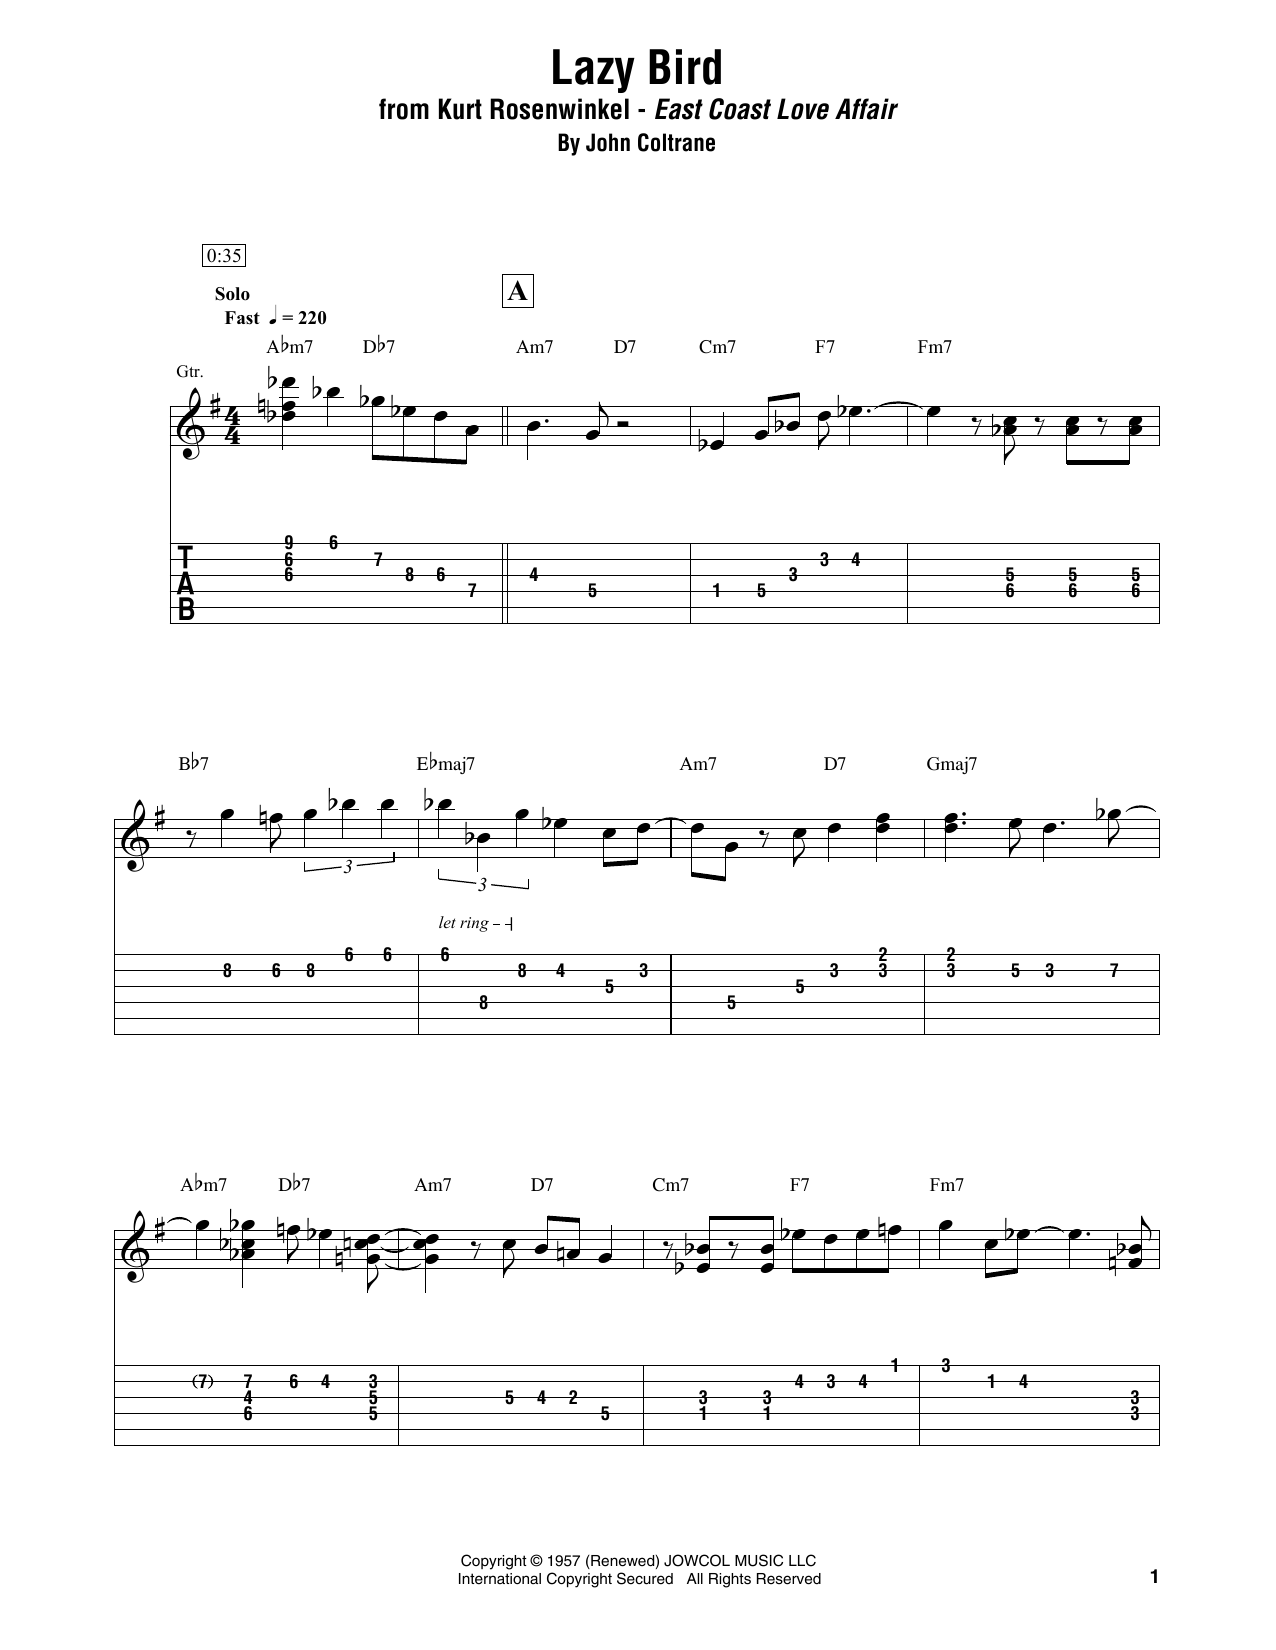 Kurt Rosenwinkel Lazy Bird Sheet Music Notes & Chords for Electric Guitar Transcription - Download or Print PDF